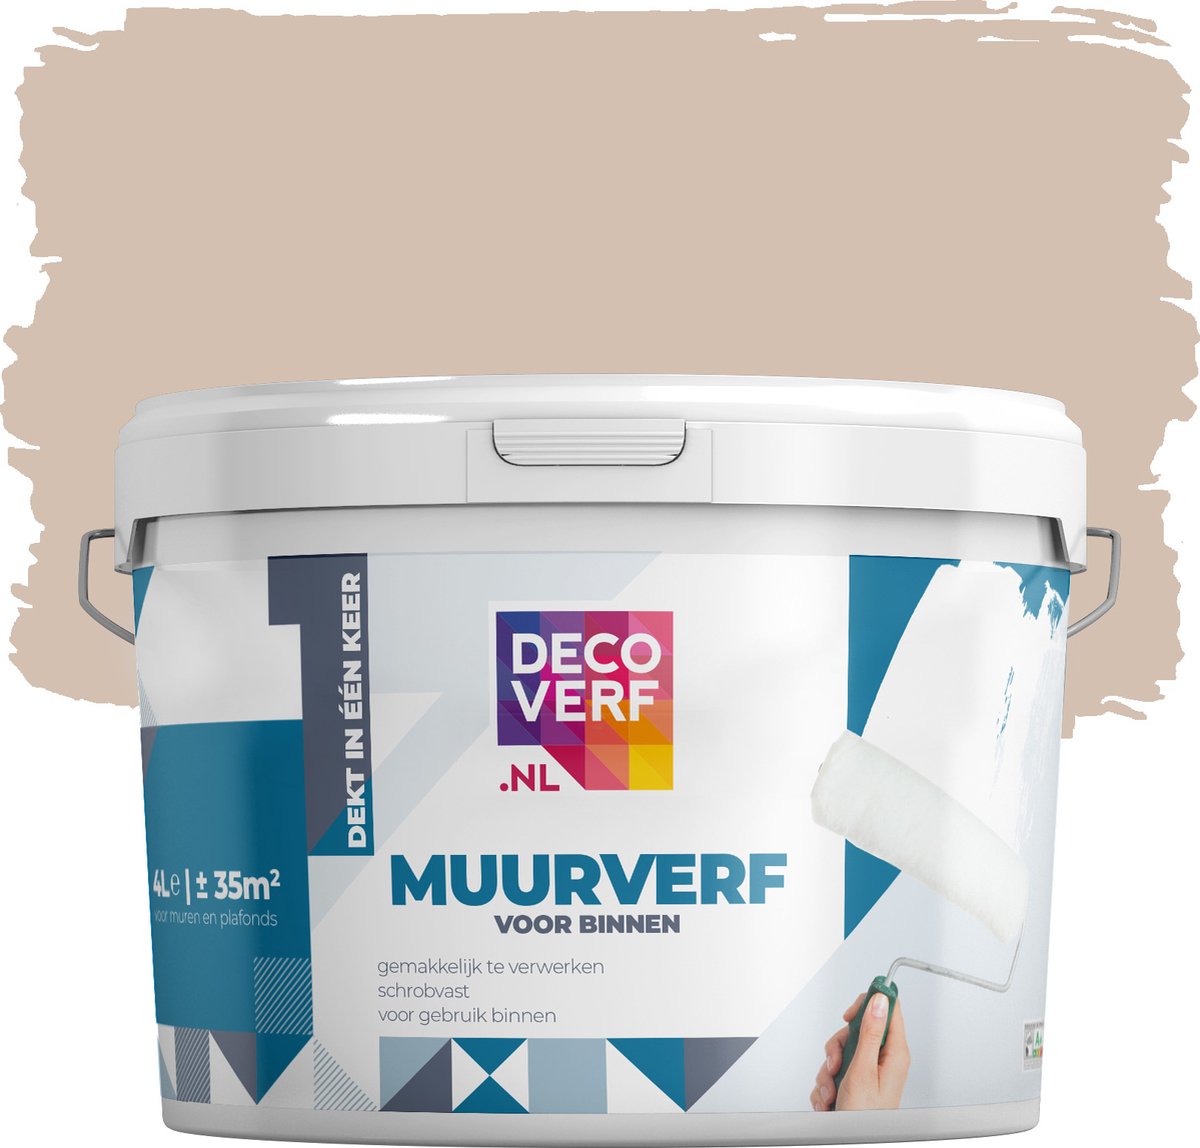 Decoverf muurverf mat, taupe, 4L - Decoverf.nl